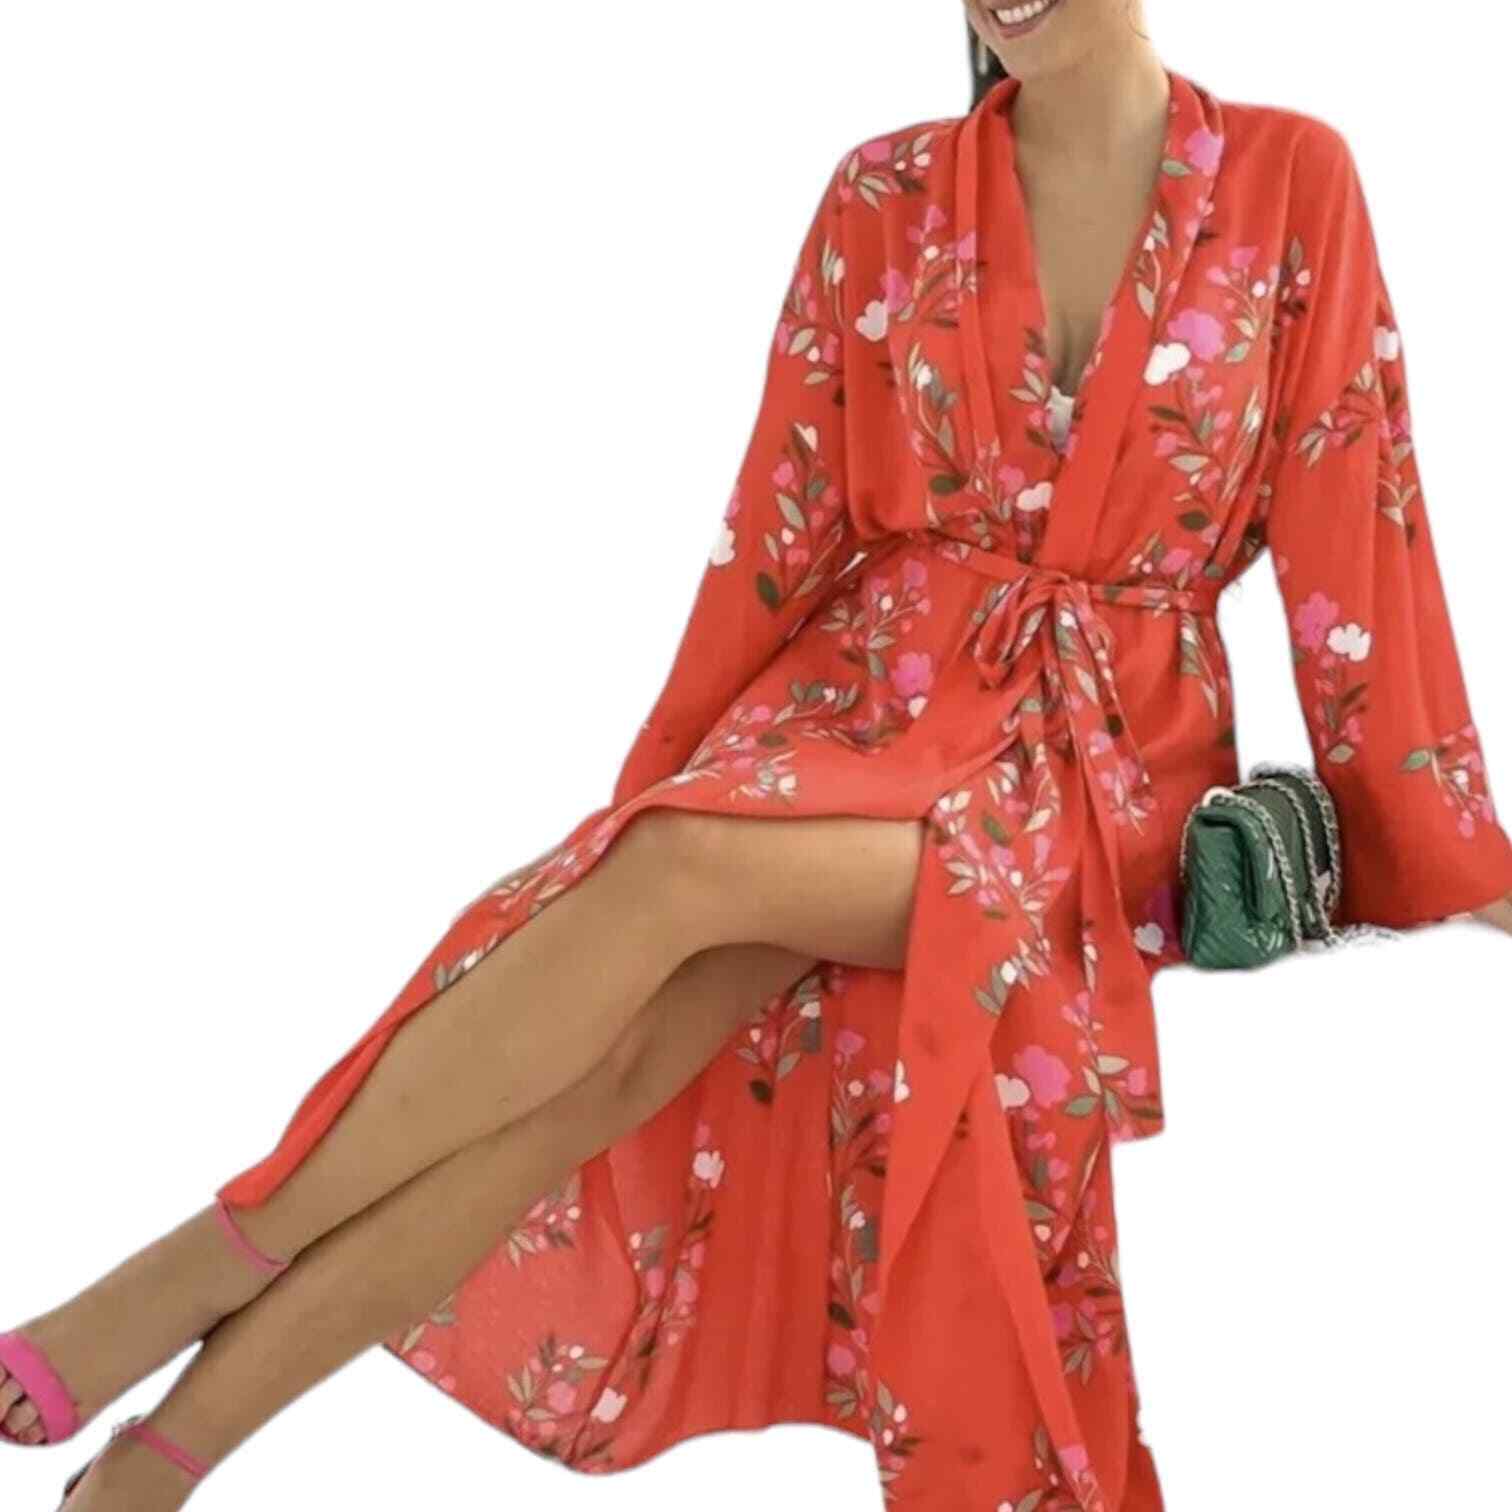 Zara red floral long kimono size medium - image 1